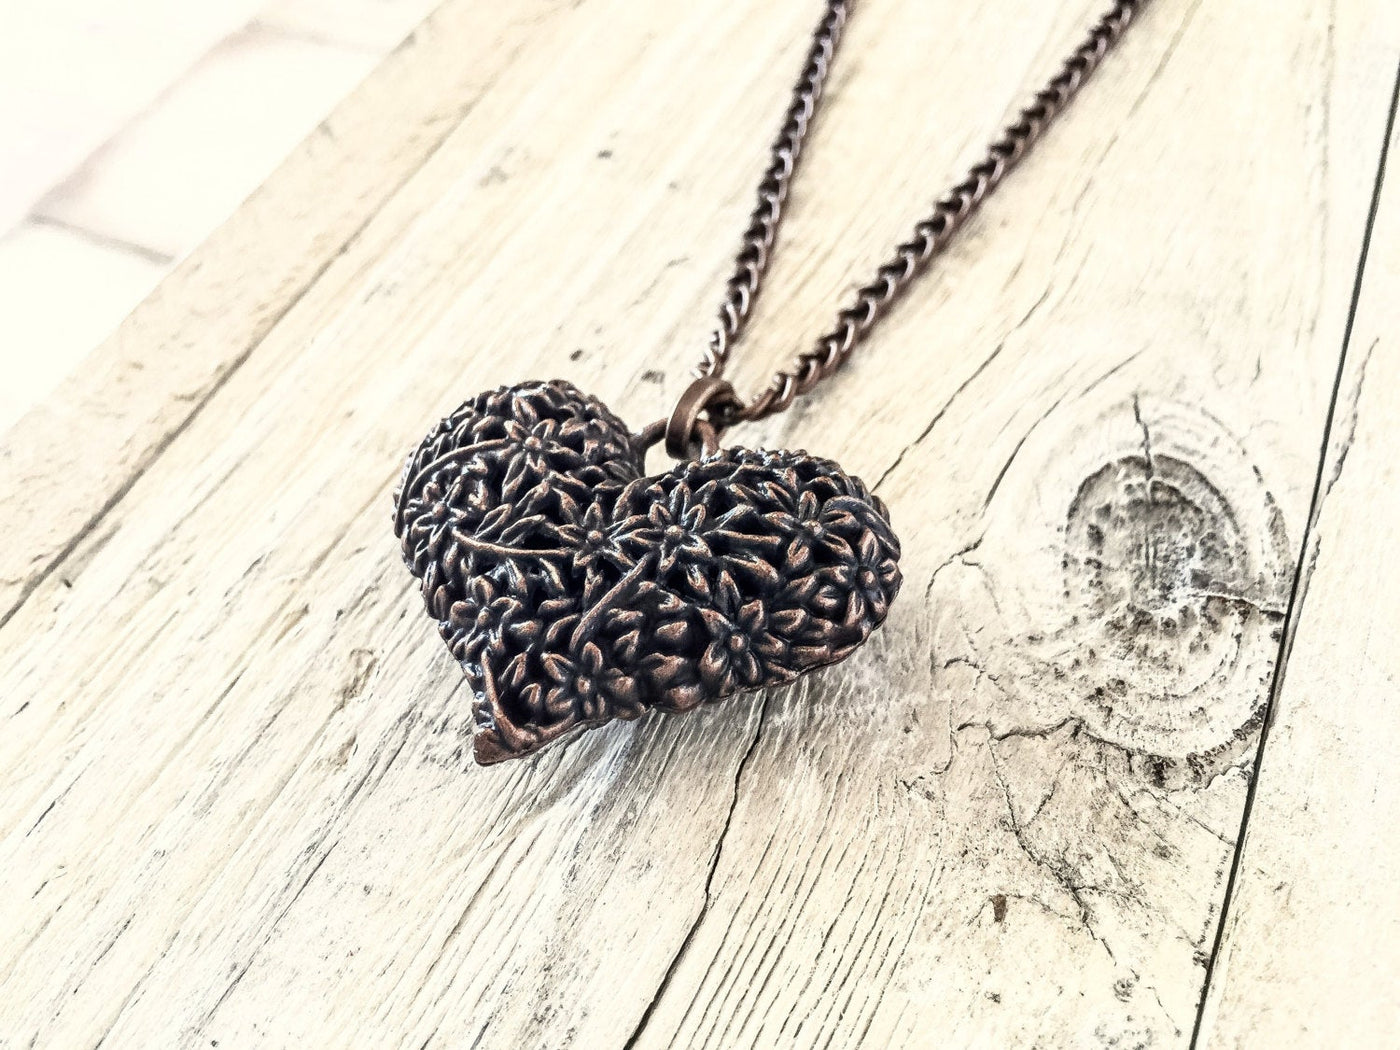 Heart Pendant, Copper Metal Necklace, Boho Heart Necklace, Long Necklace, Valentine's Day Necklace, N113